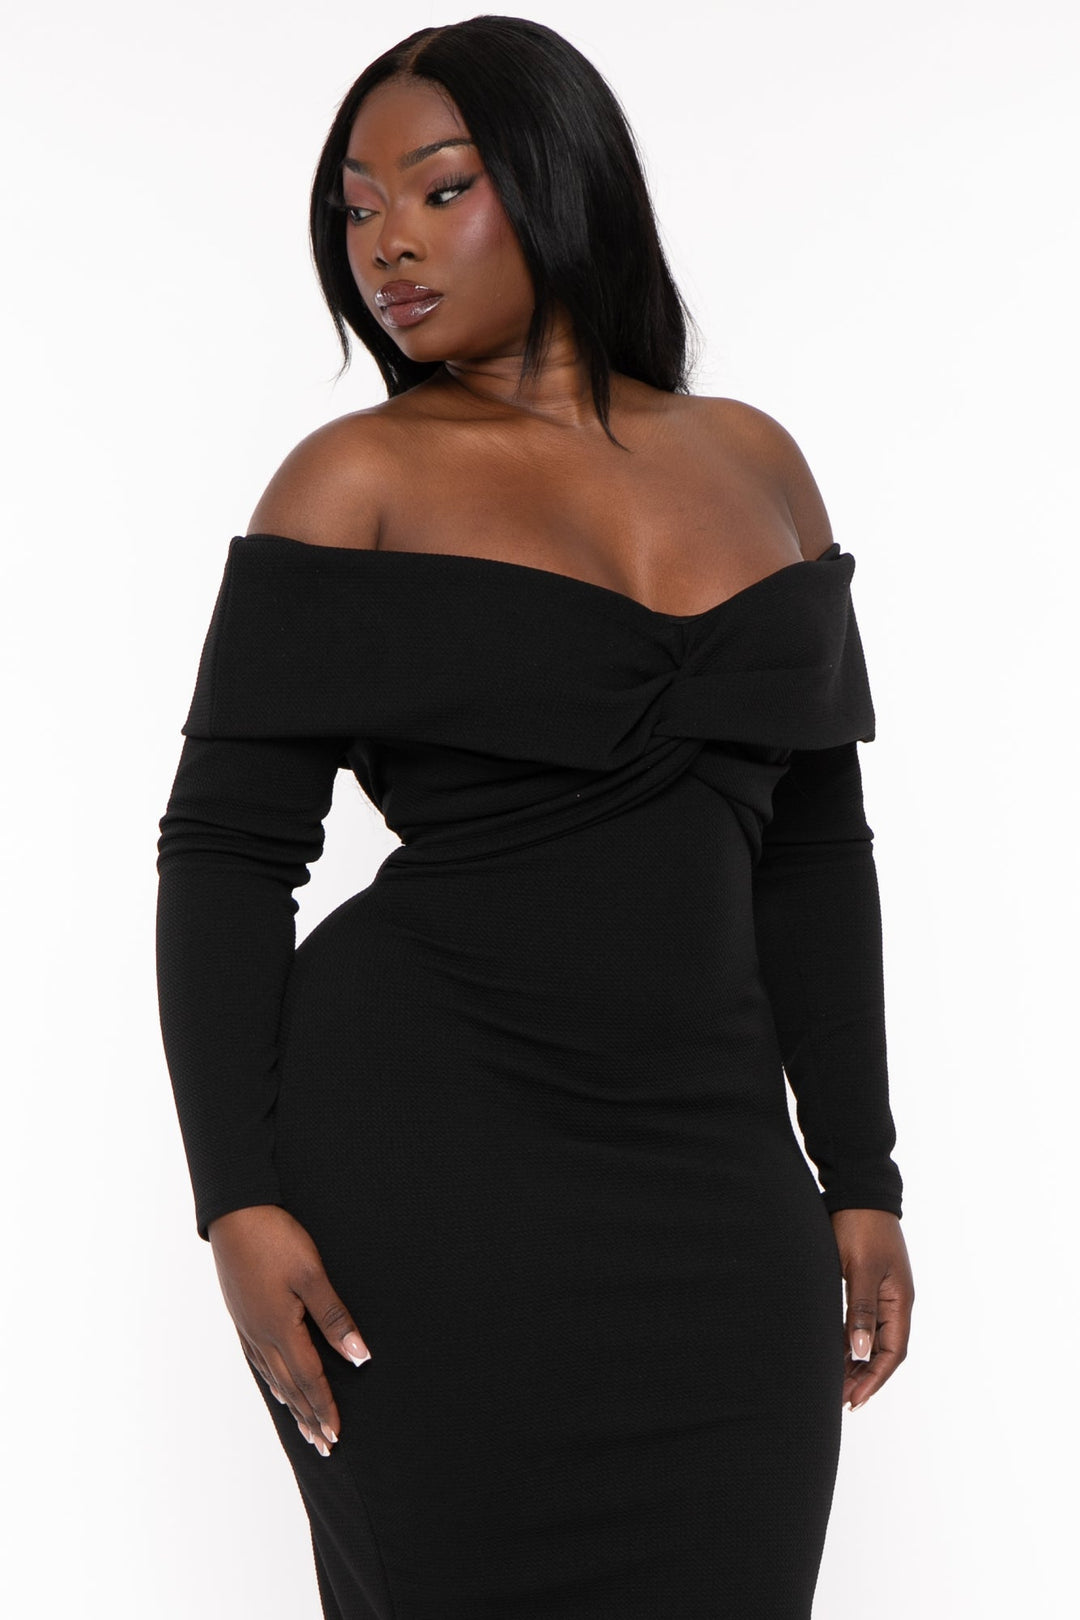 Curvy Sense Dresses Plus Size Lesleyanne Midi Dress- Black